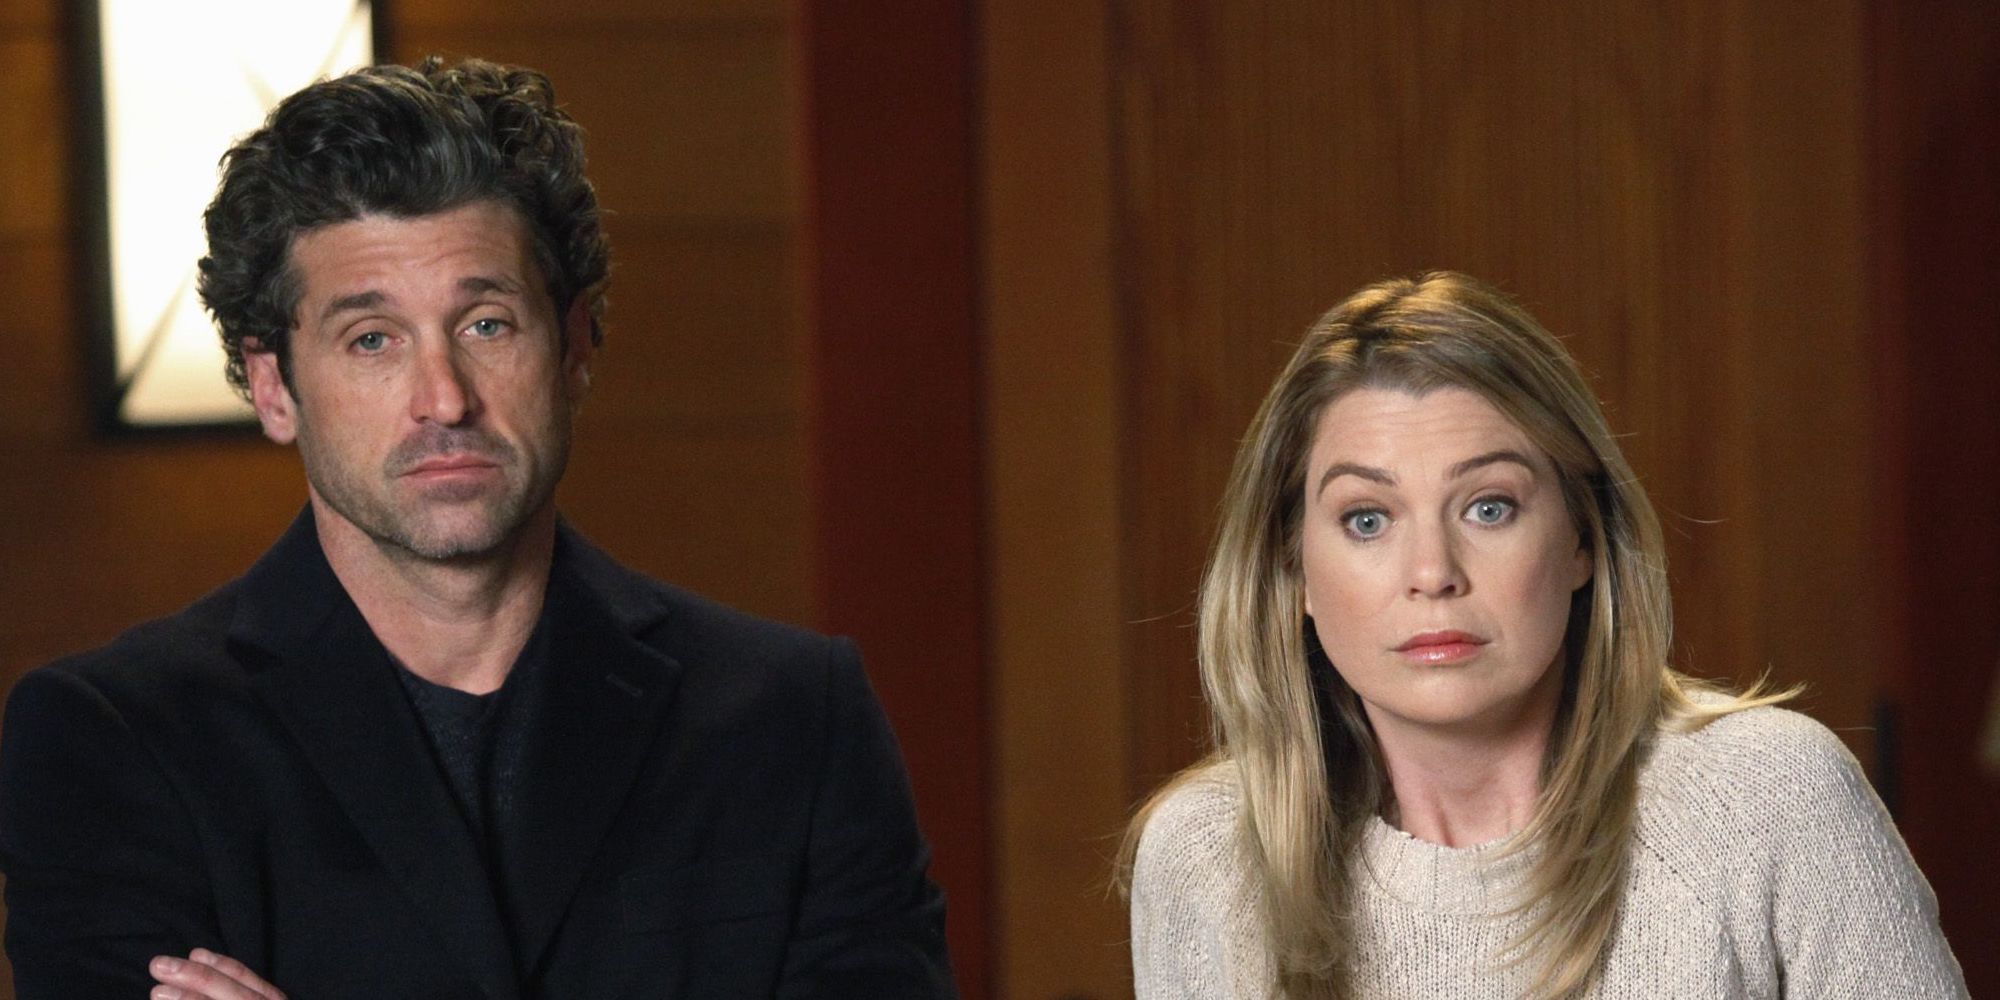 Derek and Meredith look astonished in Greys Anatomy